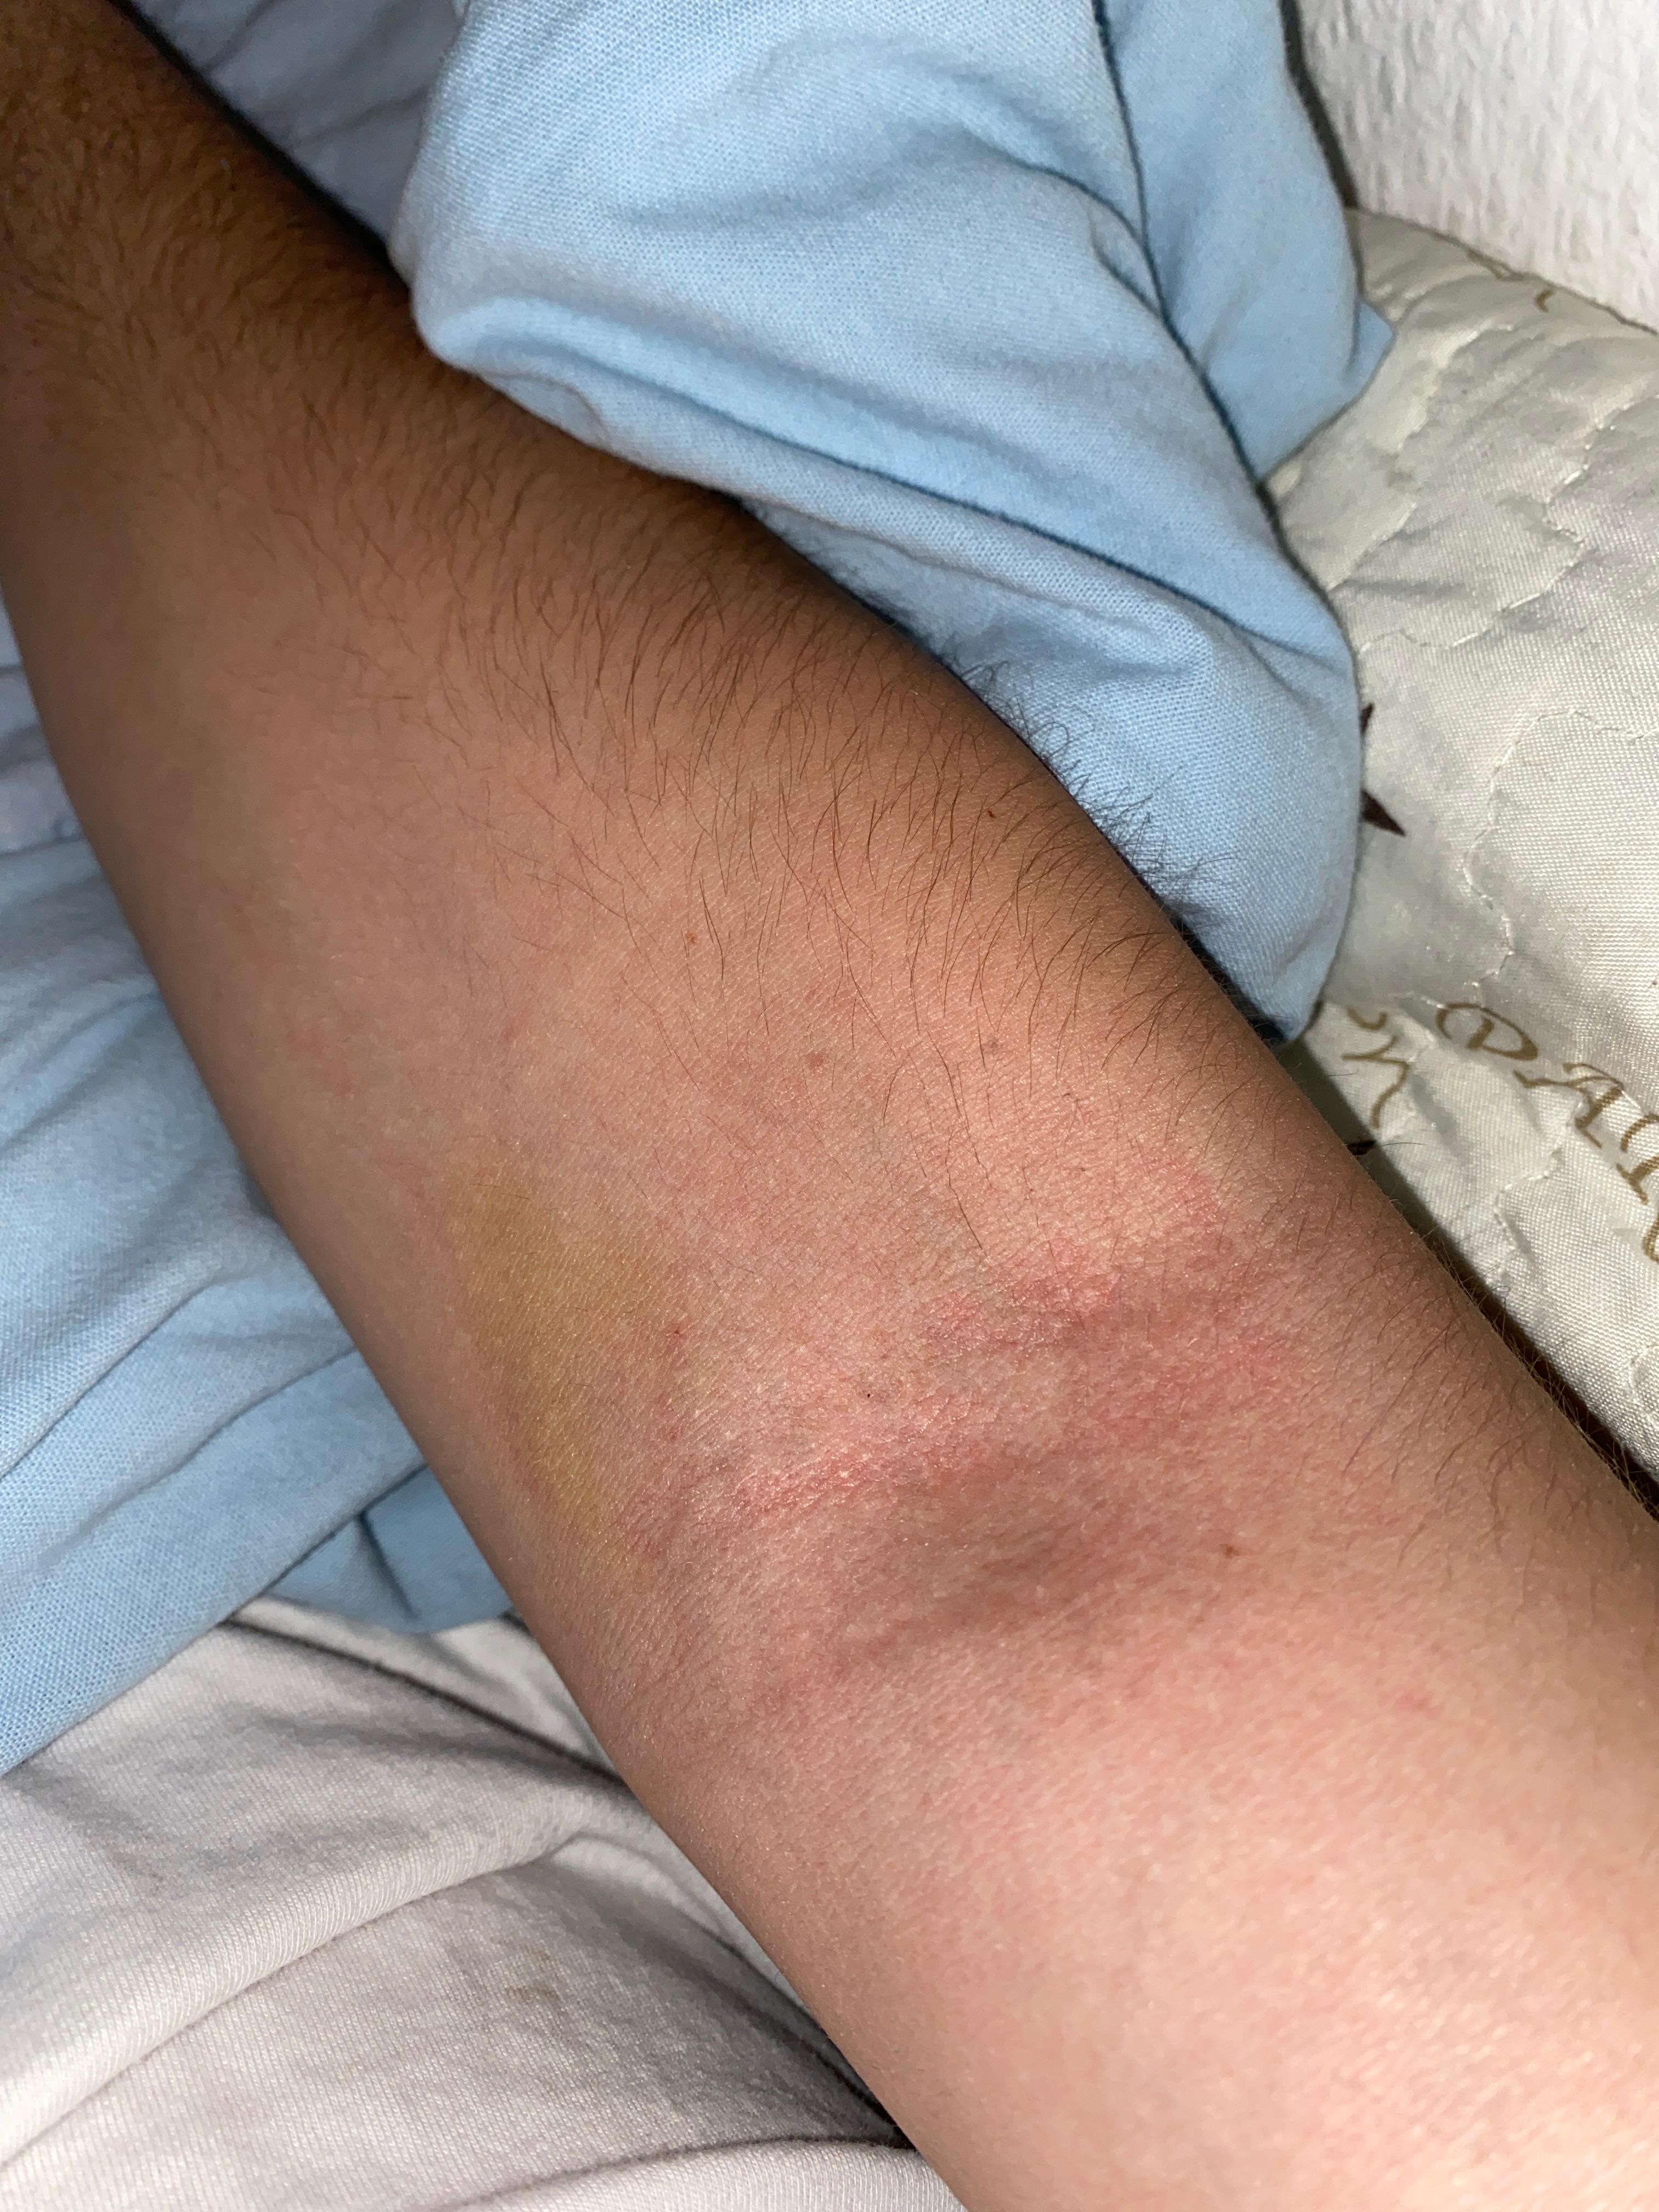 39++ Thrombose im arm bilder , Trombose Im Arm / Thrombose Wikipedia / Eine thrombose im arm ist